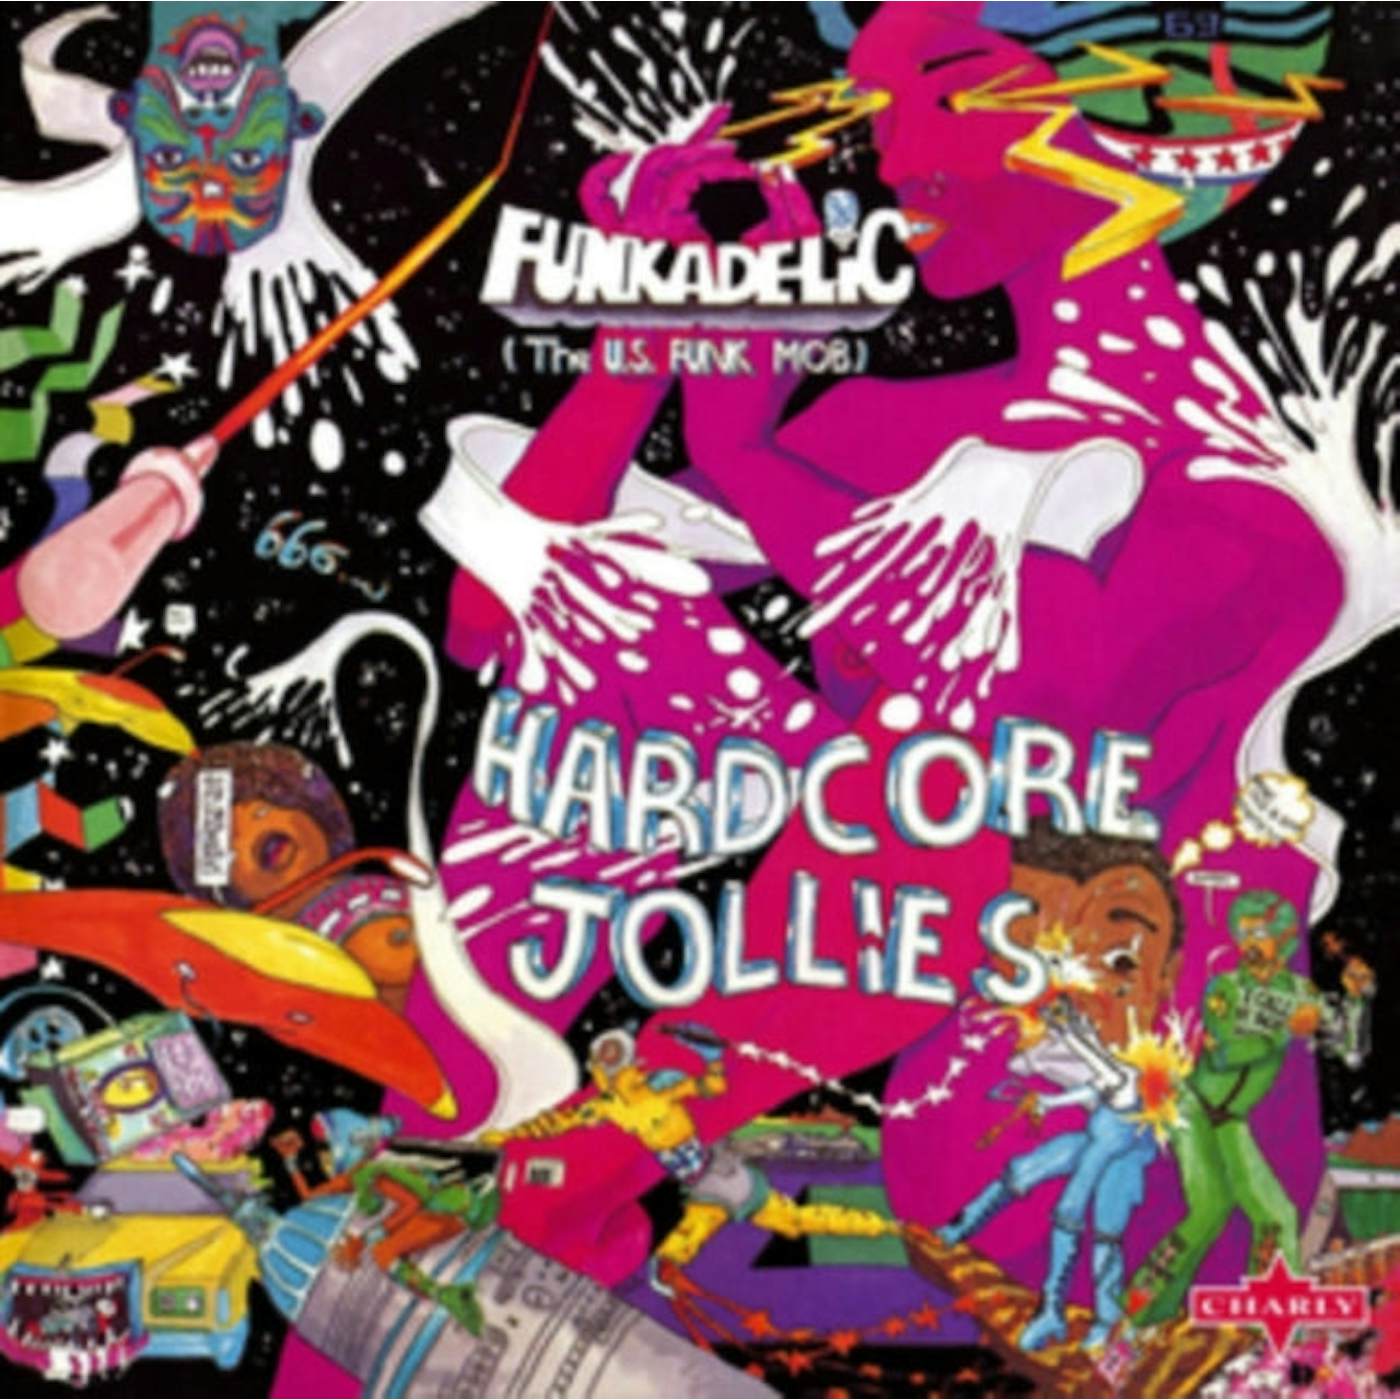 Funkadelic LP Vinyl Record - Hardcore Jollies (Pink Translucent Vinyl)